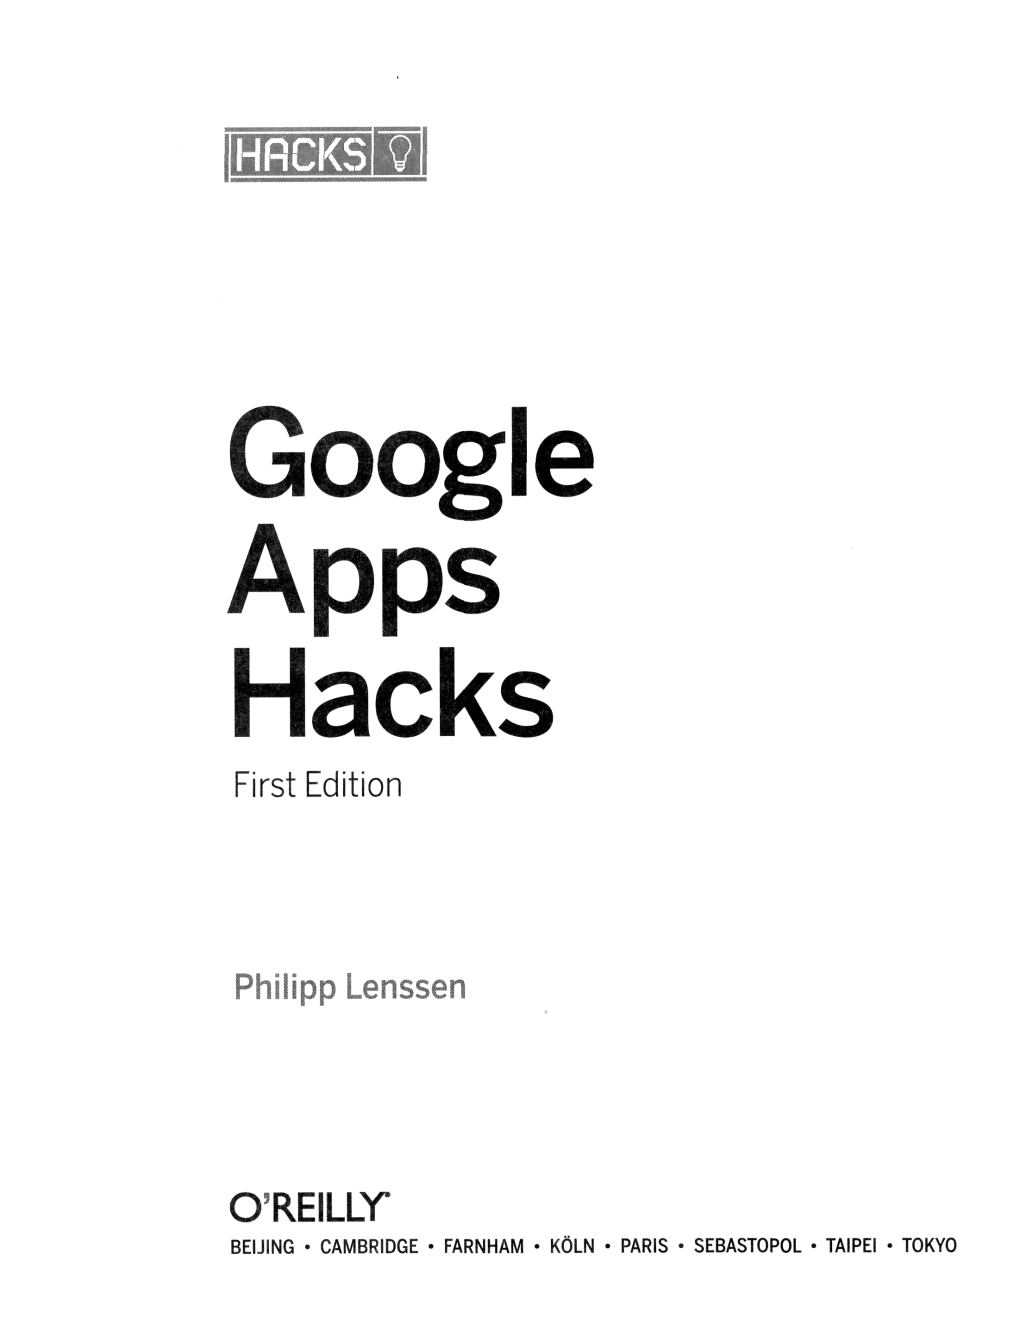 Google Acks First Edition